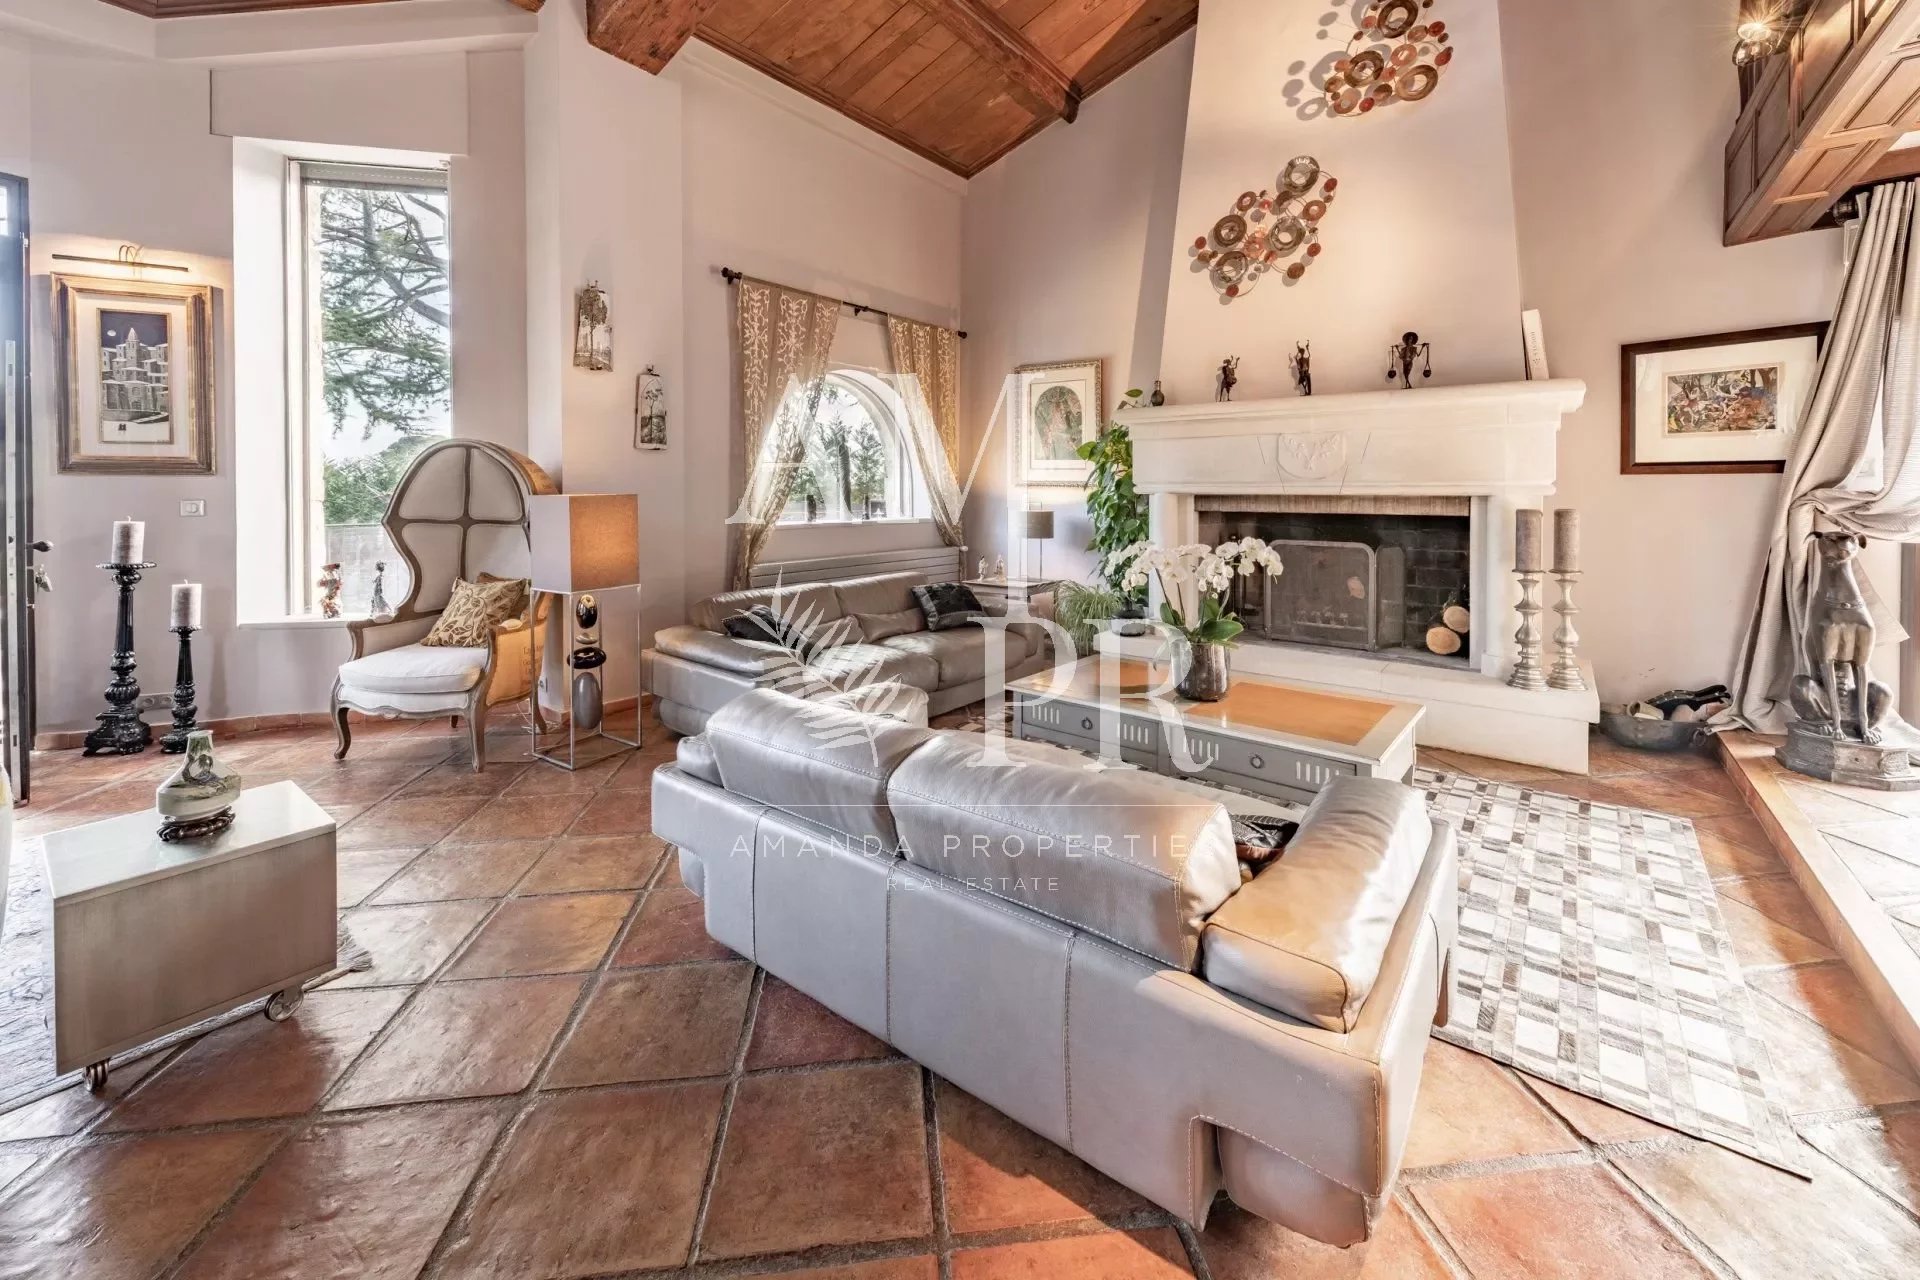 Living-room Tile Fireplace High ceiling